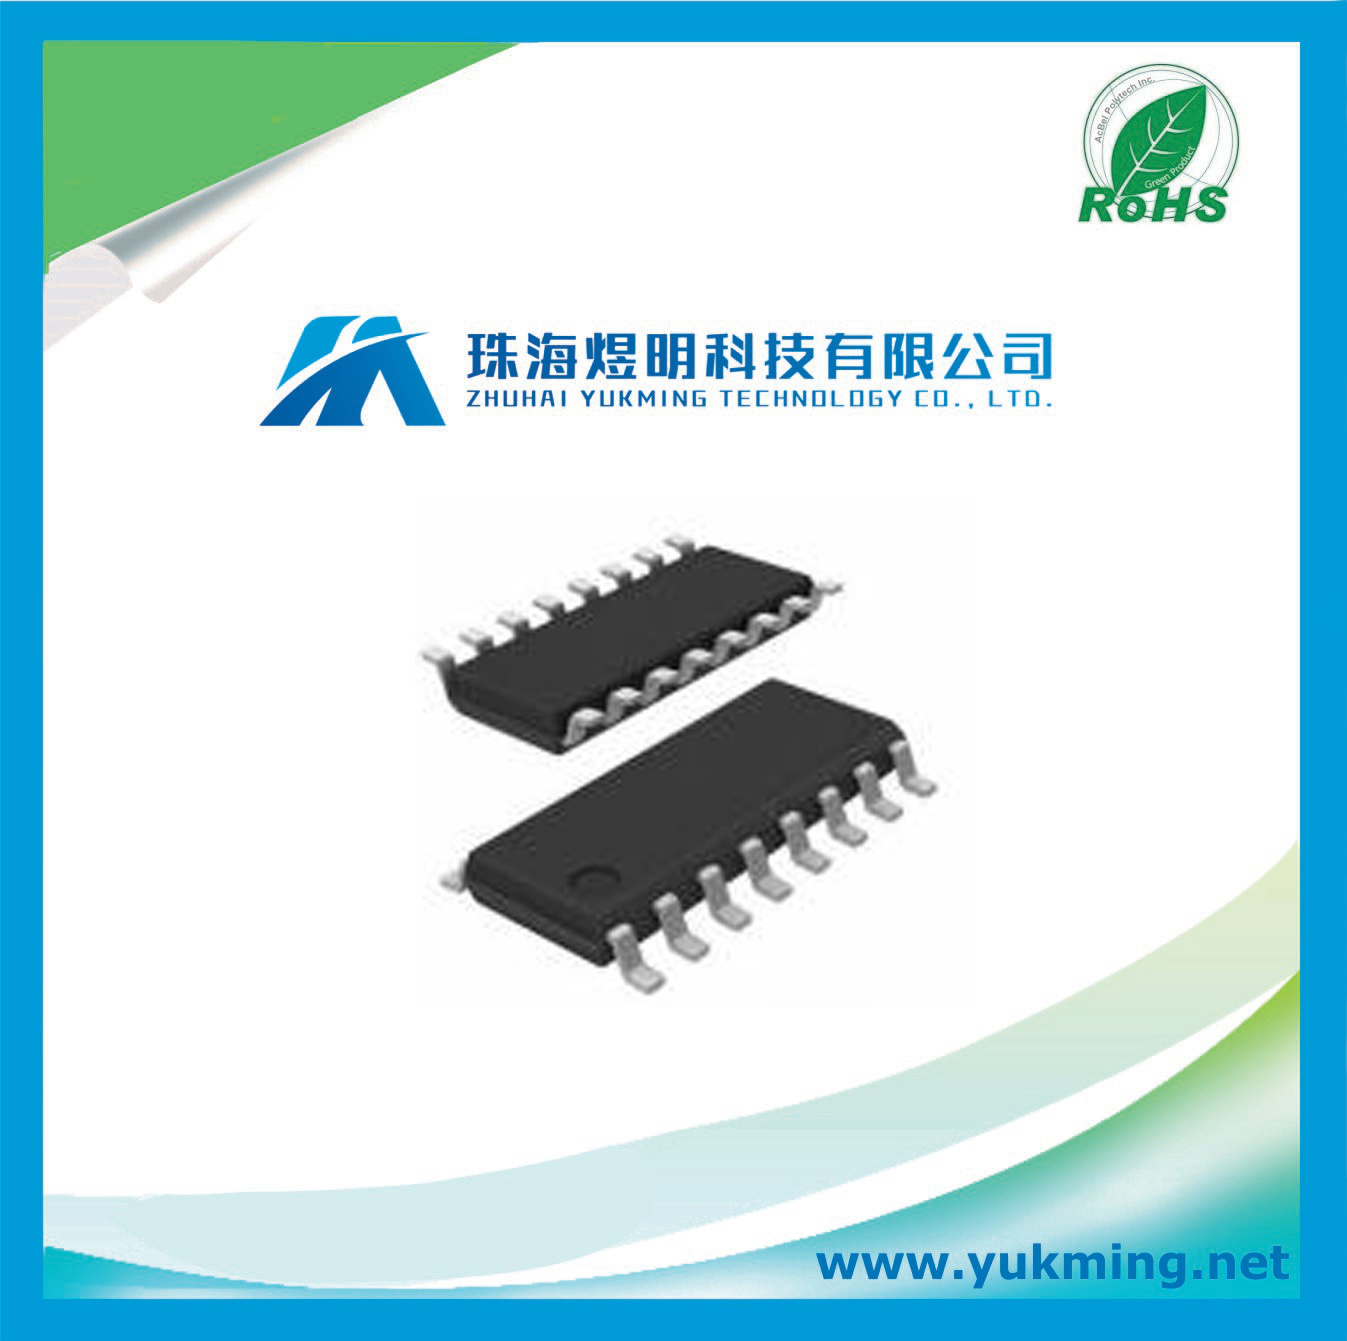 IC Ap8921A Integrated Circuit of Standard CMOS Process